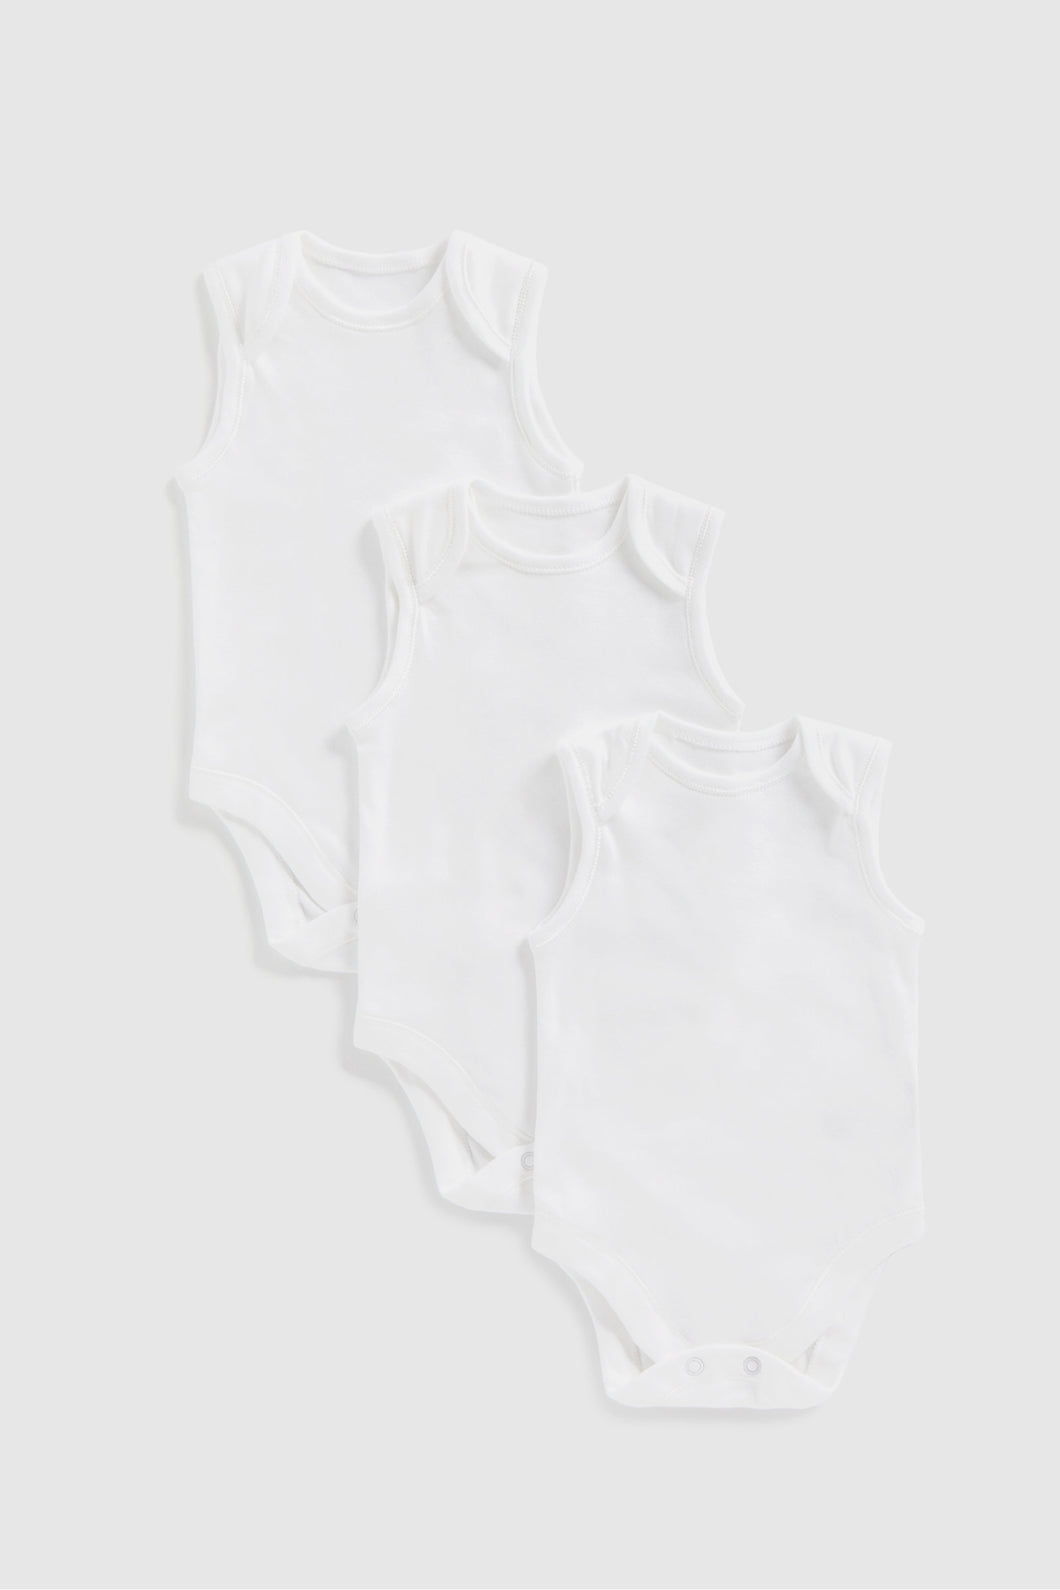 Mothercare White Sleeveless Bodysuits - 3 Pack